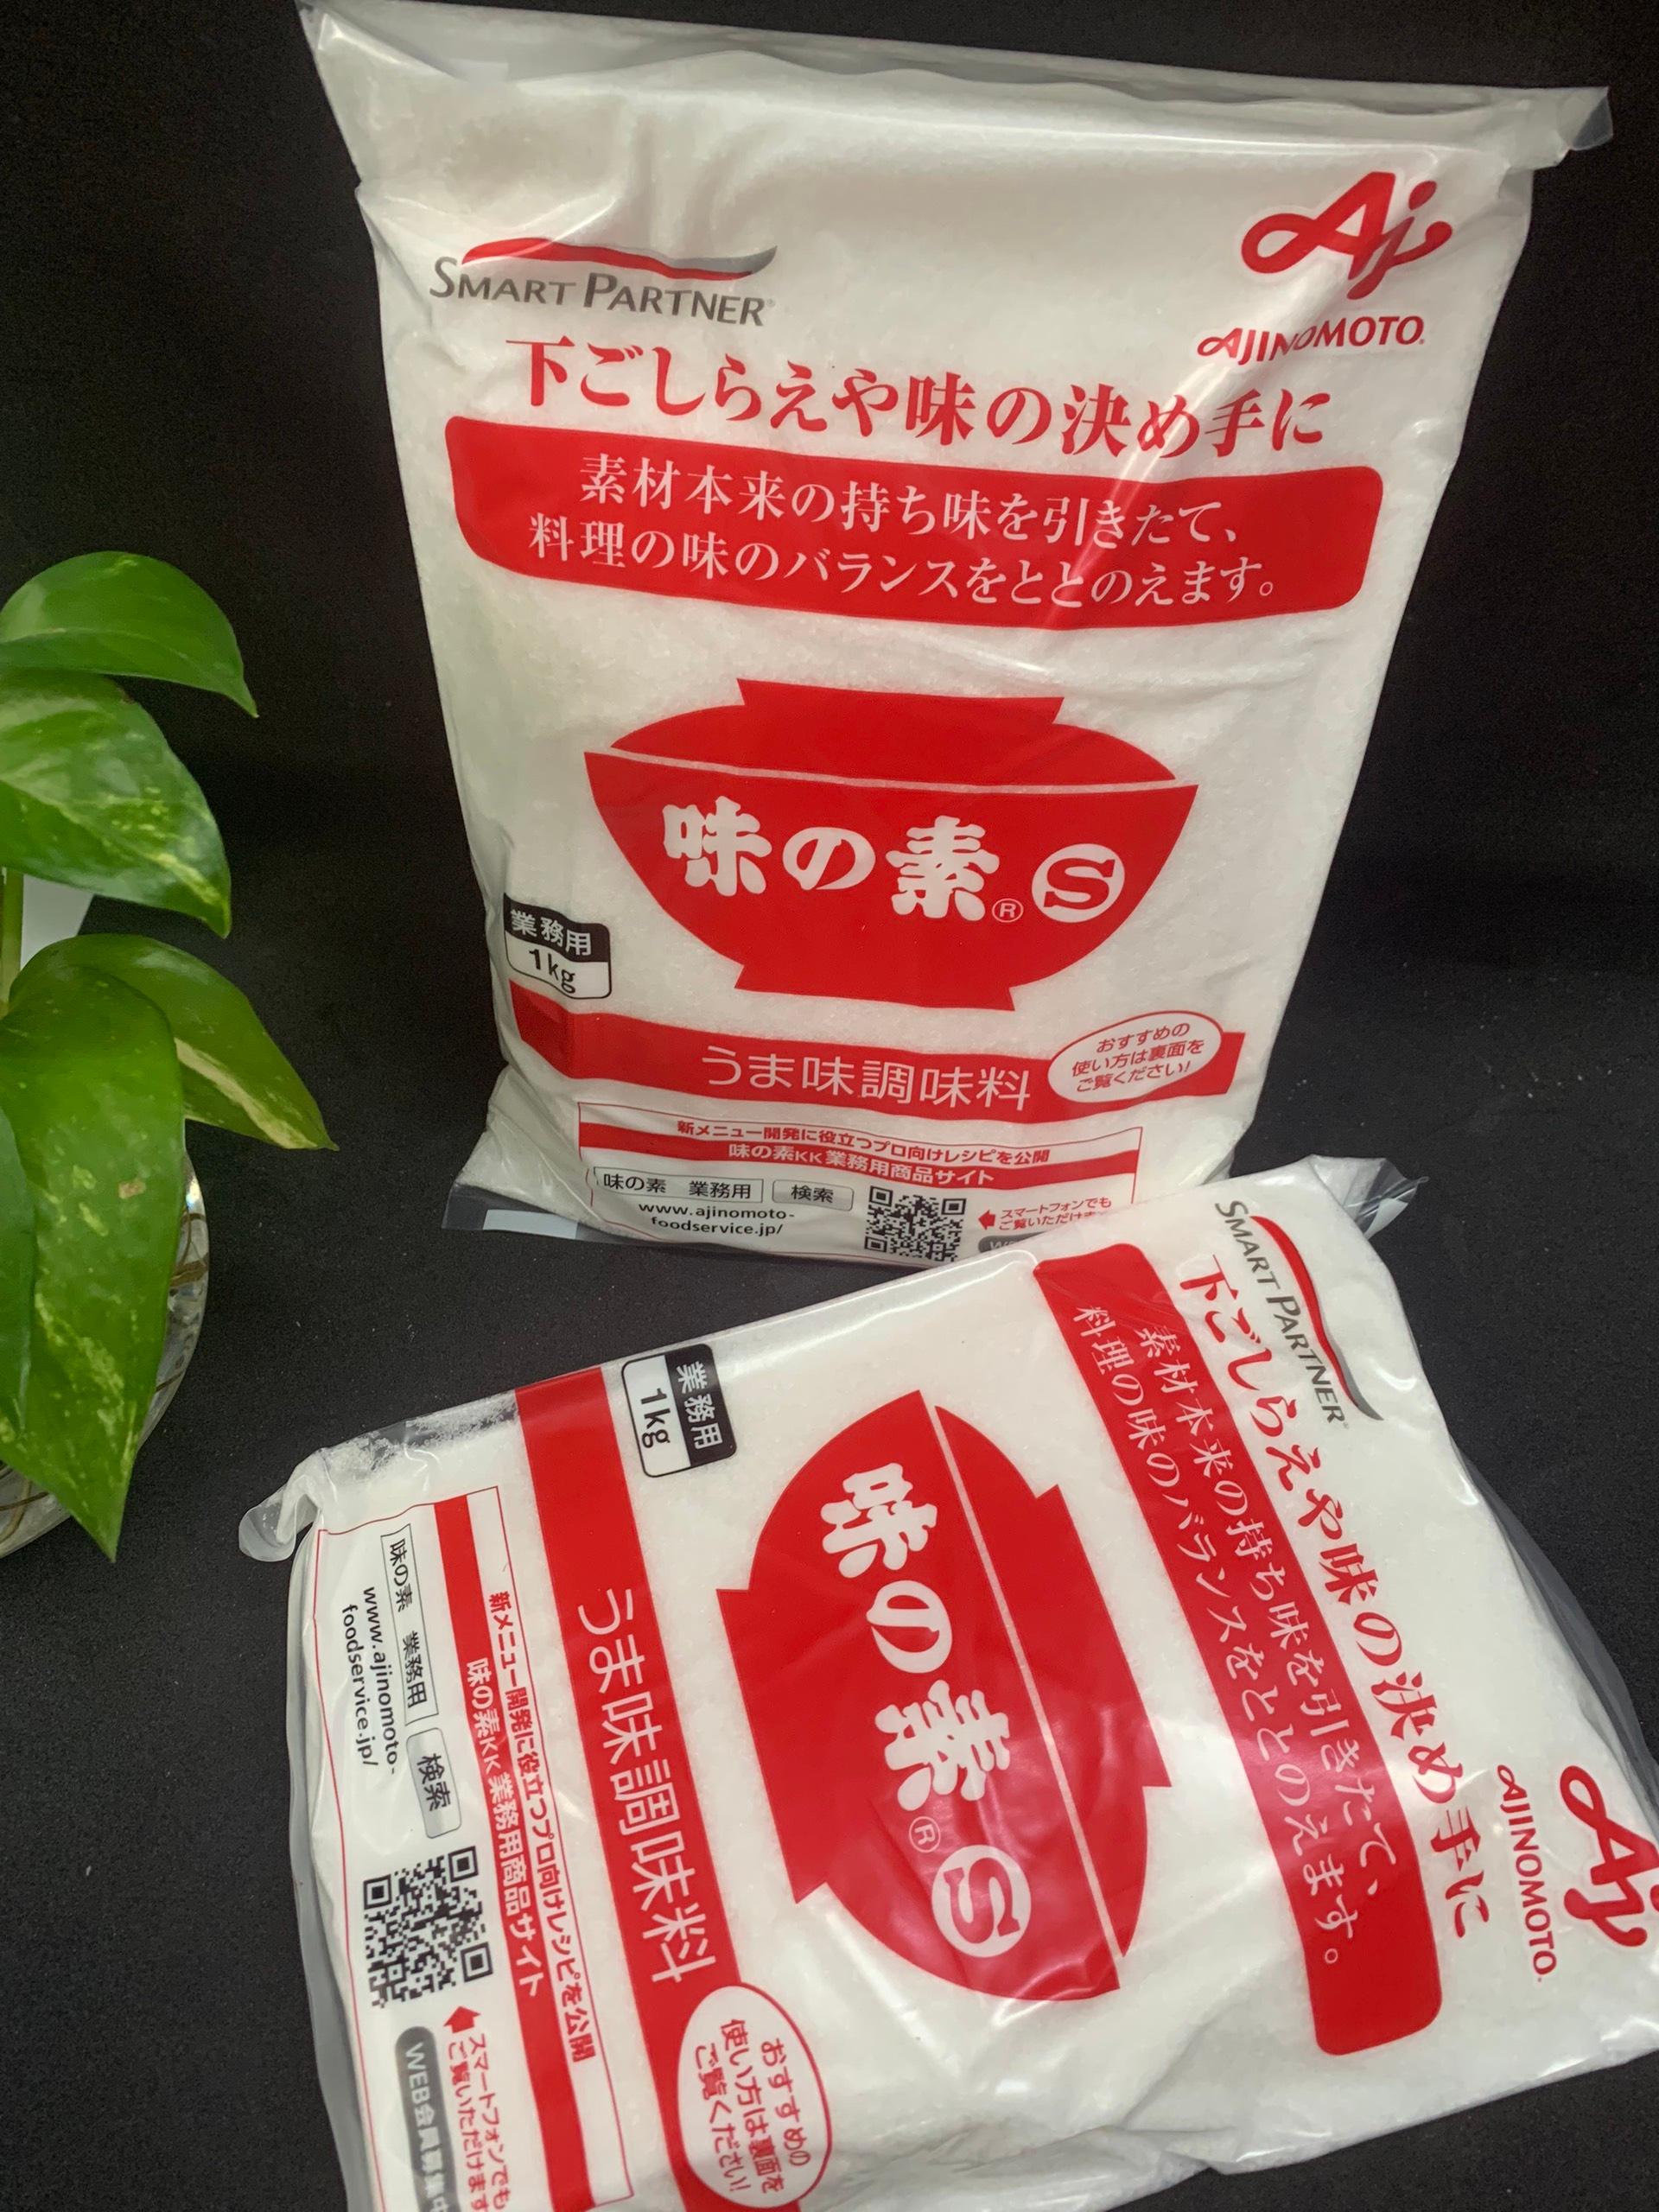 Bột ngọt Aj.inom.oto 1kg Nhật Bản